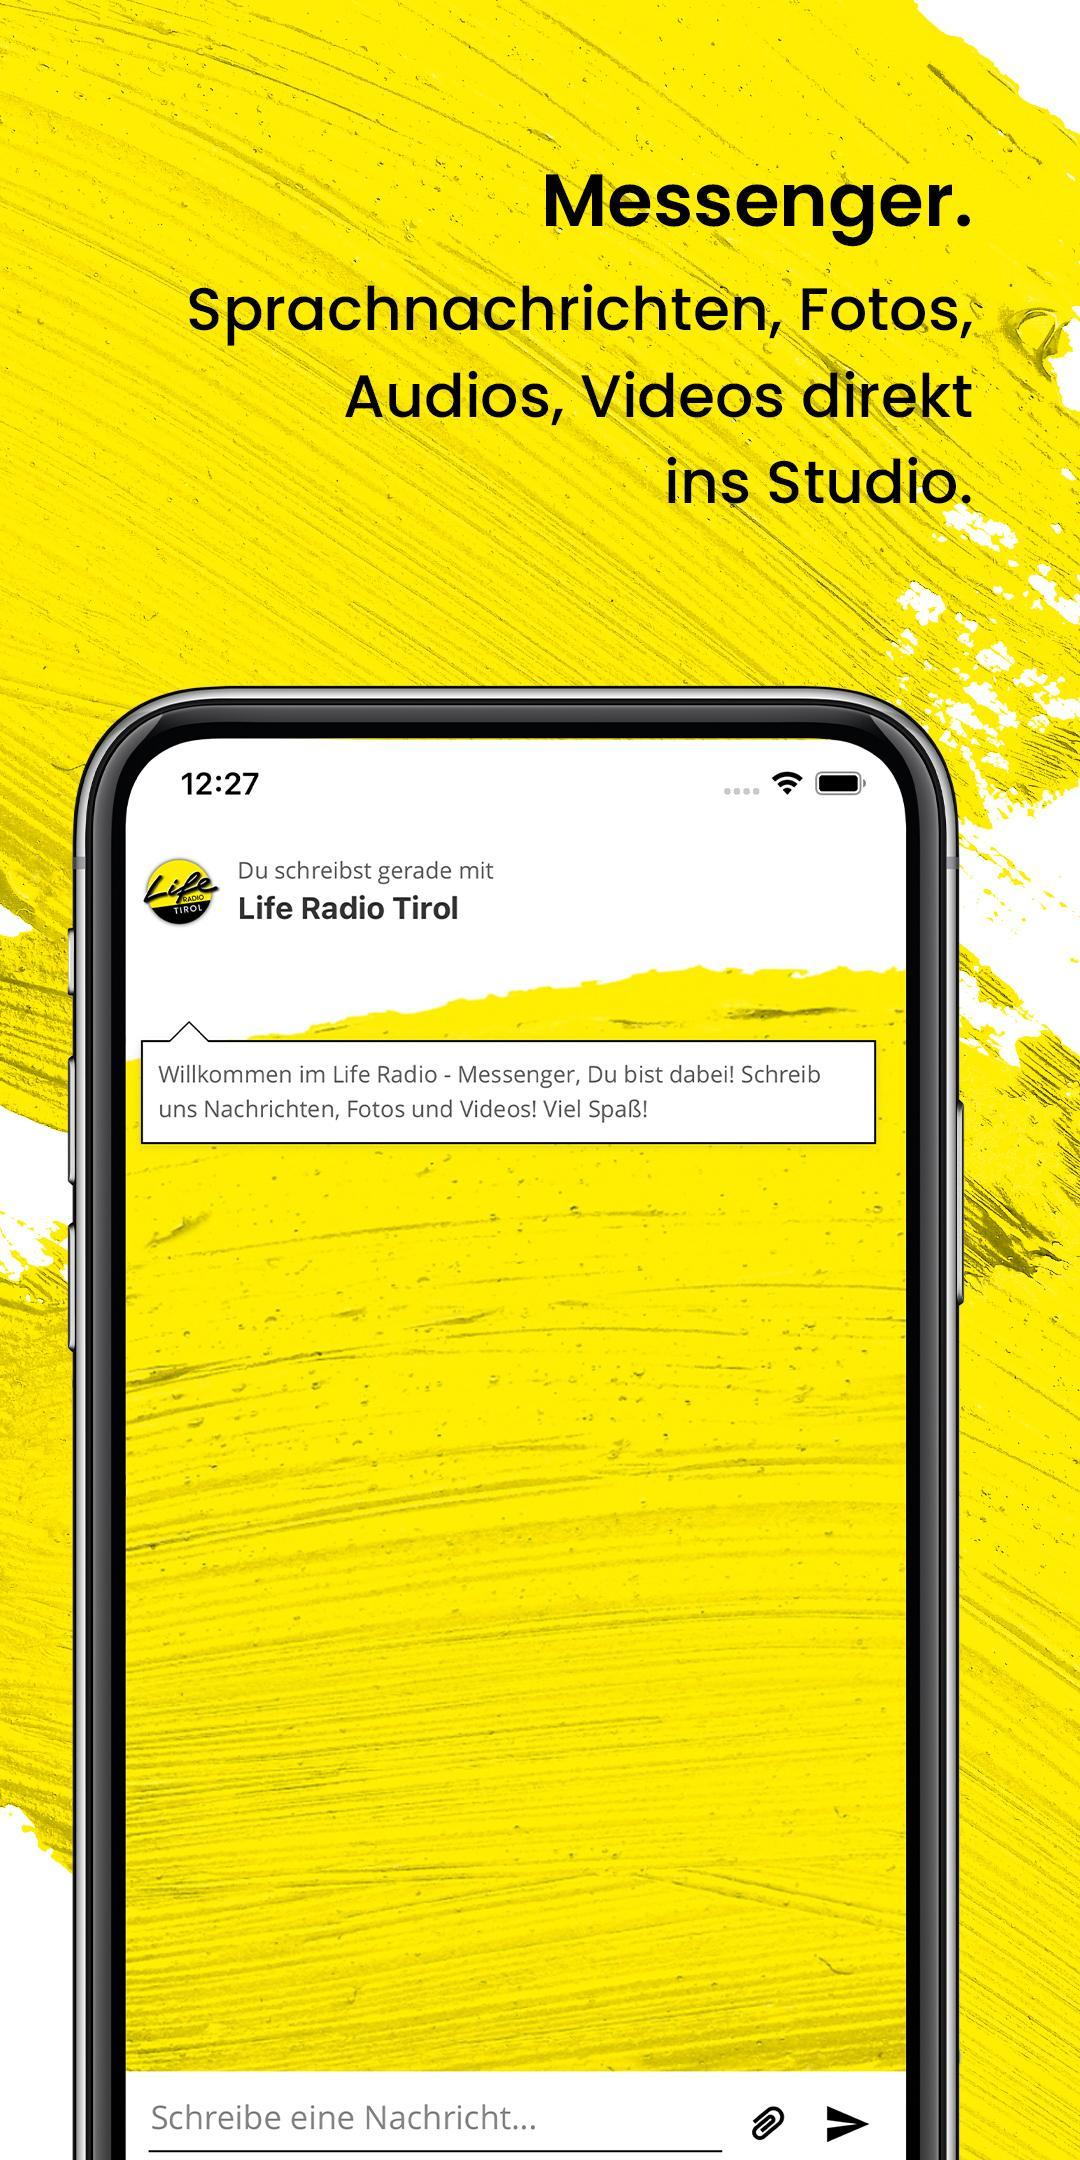 Life Radio Tirol for Android - APK Download